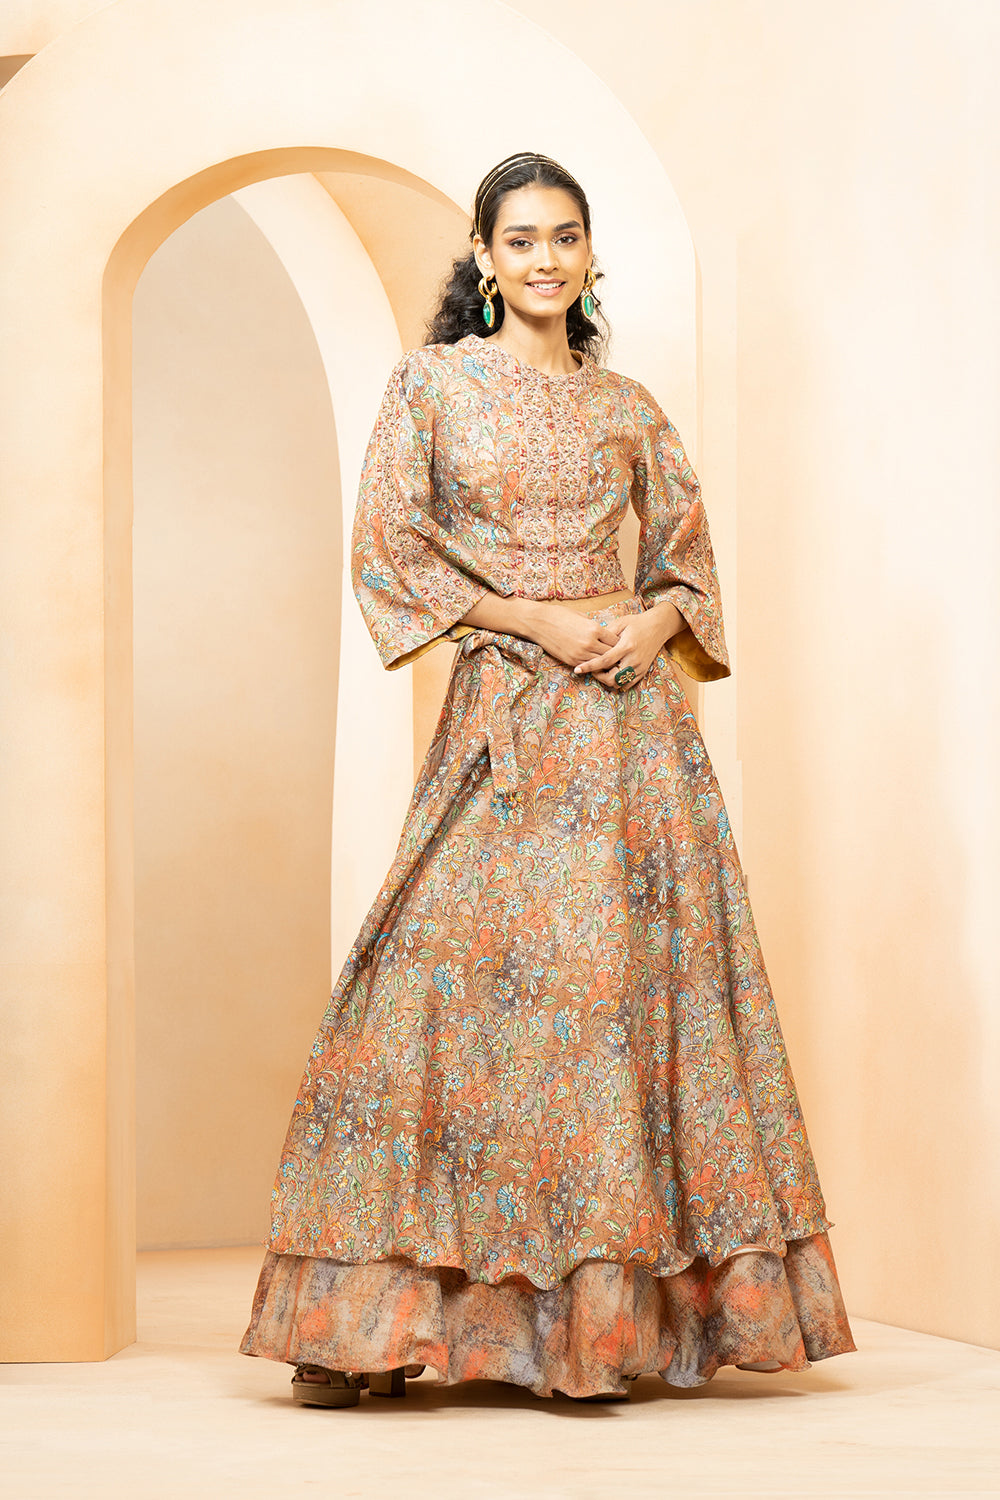 Buy Sky Blue Indowestern Lehenga Set In Georgette With Embroidered Jacket  Kalki Fashion India